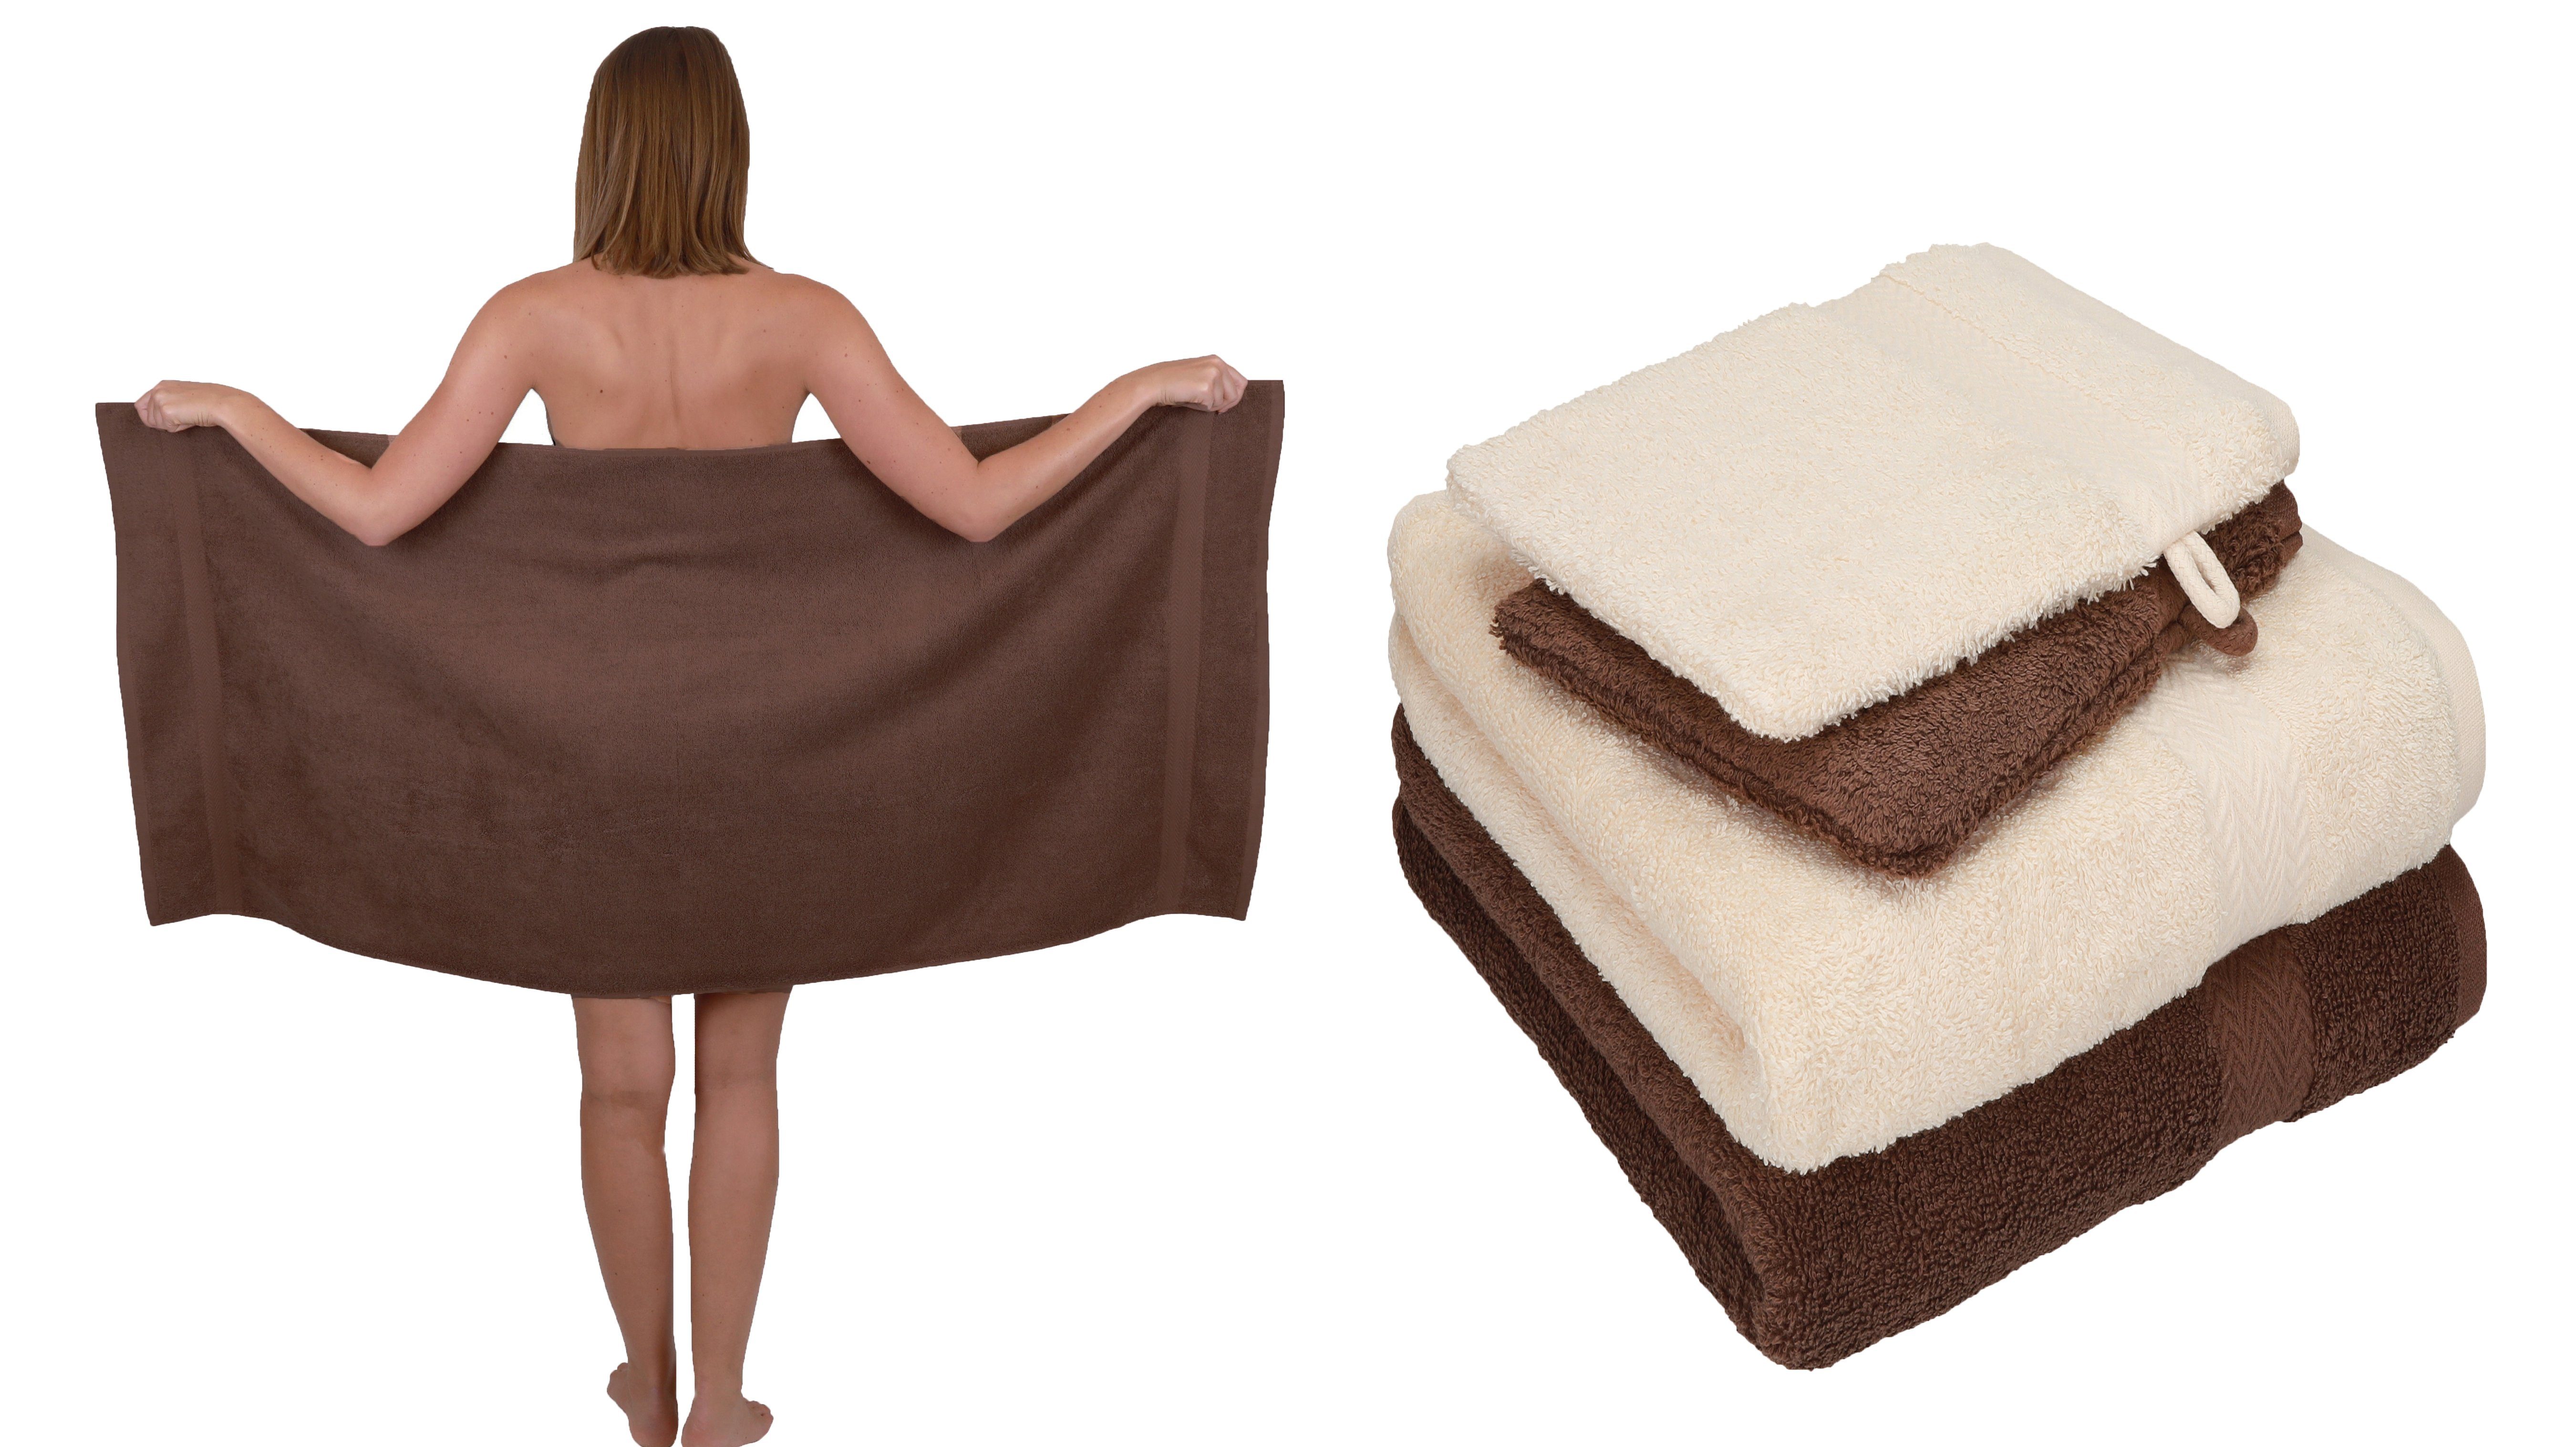 Betz Handtuch Set 5 TLG. Handtuch Set Single Pack 100% Baumwolle 1 Duschtuch 2 Handtücher 2 Waschhandschuhe, 100% Baumwolle nuss-beige